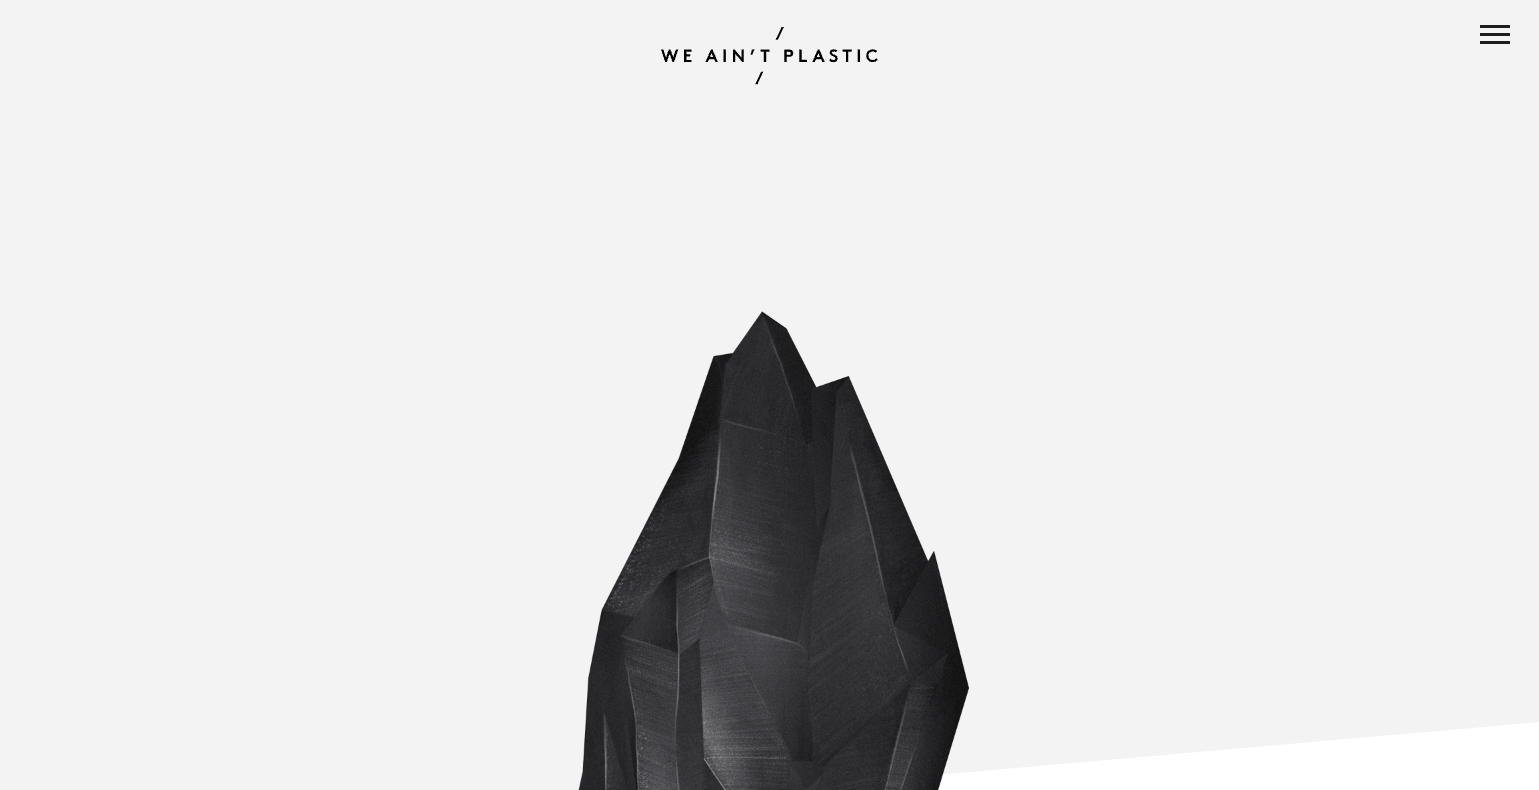 We Ain't Plastic showcases its portfolio on a professional websit.